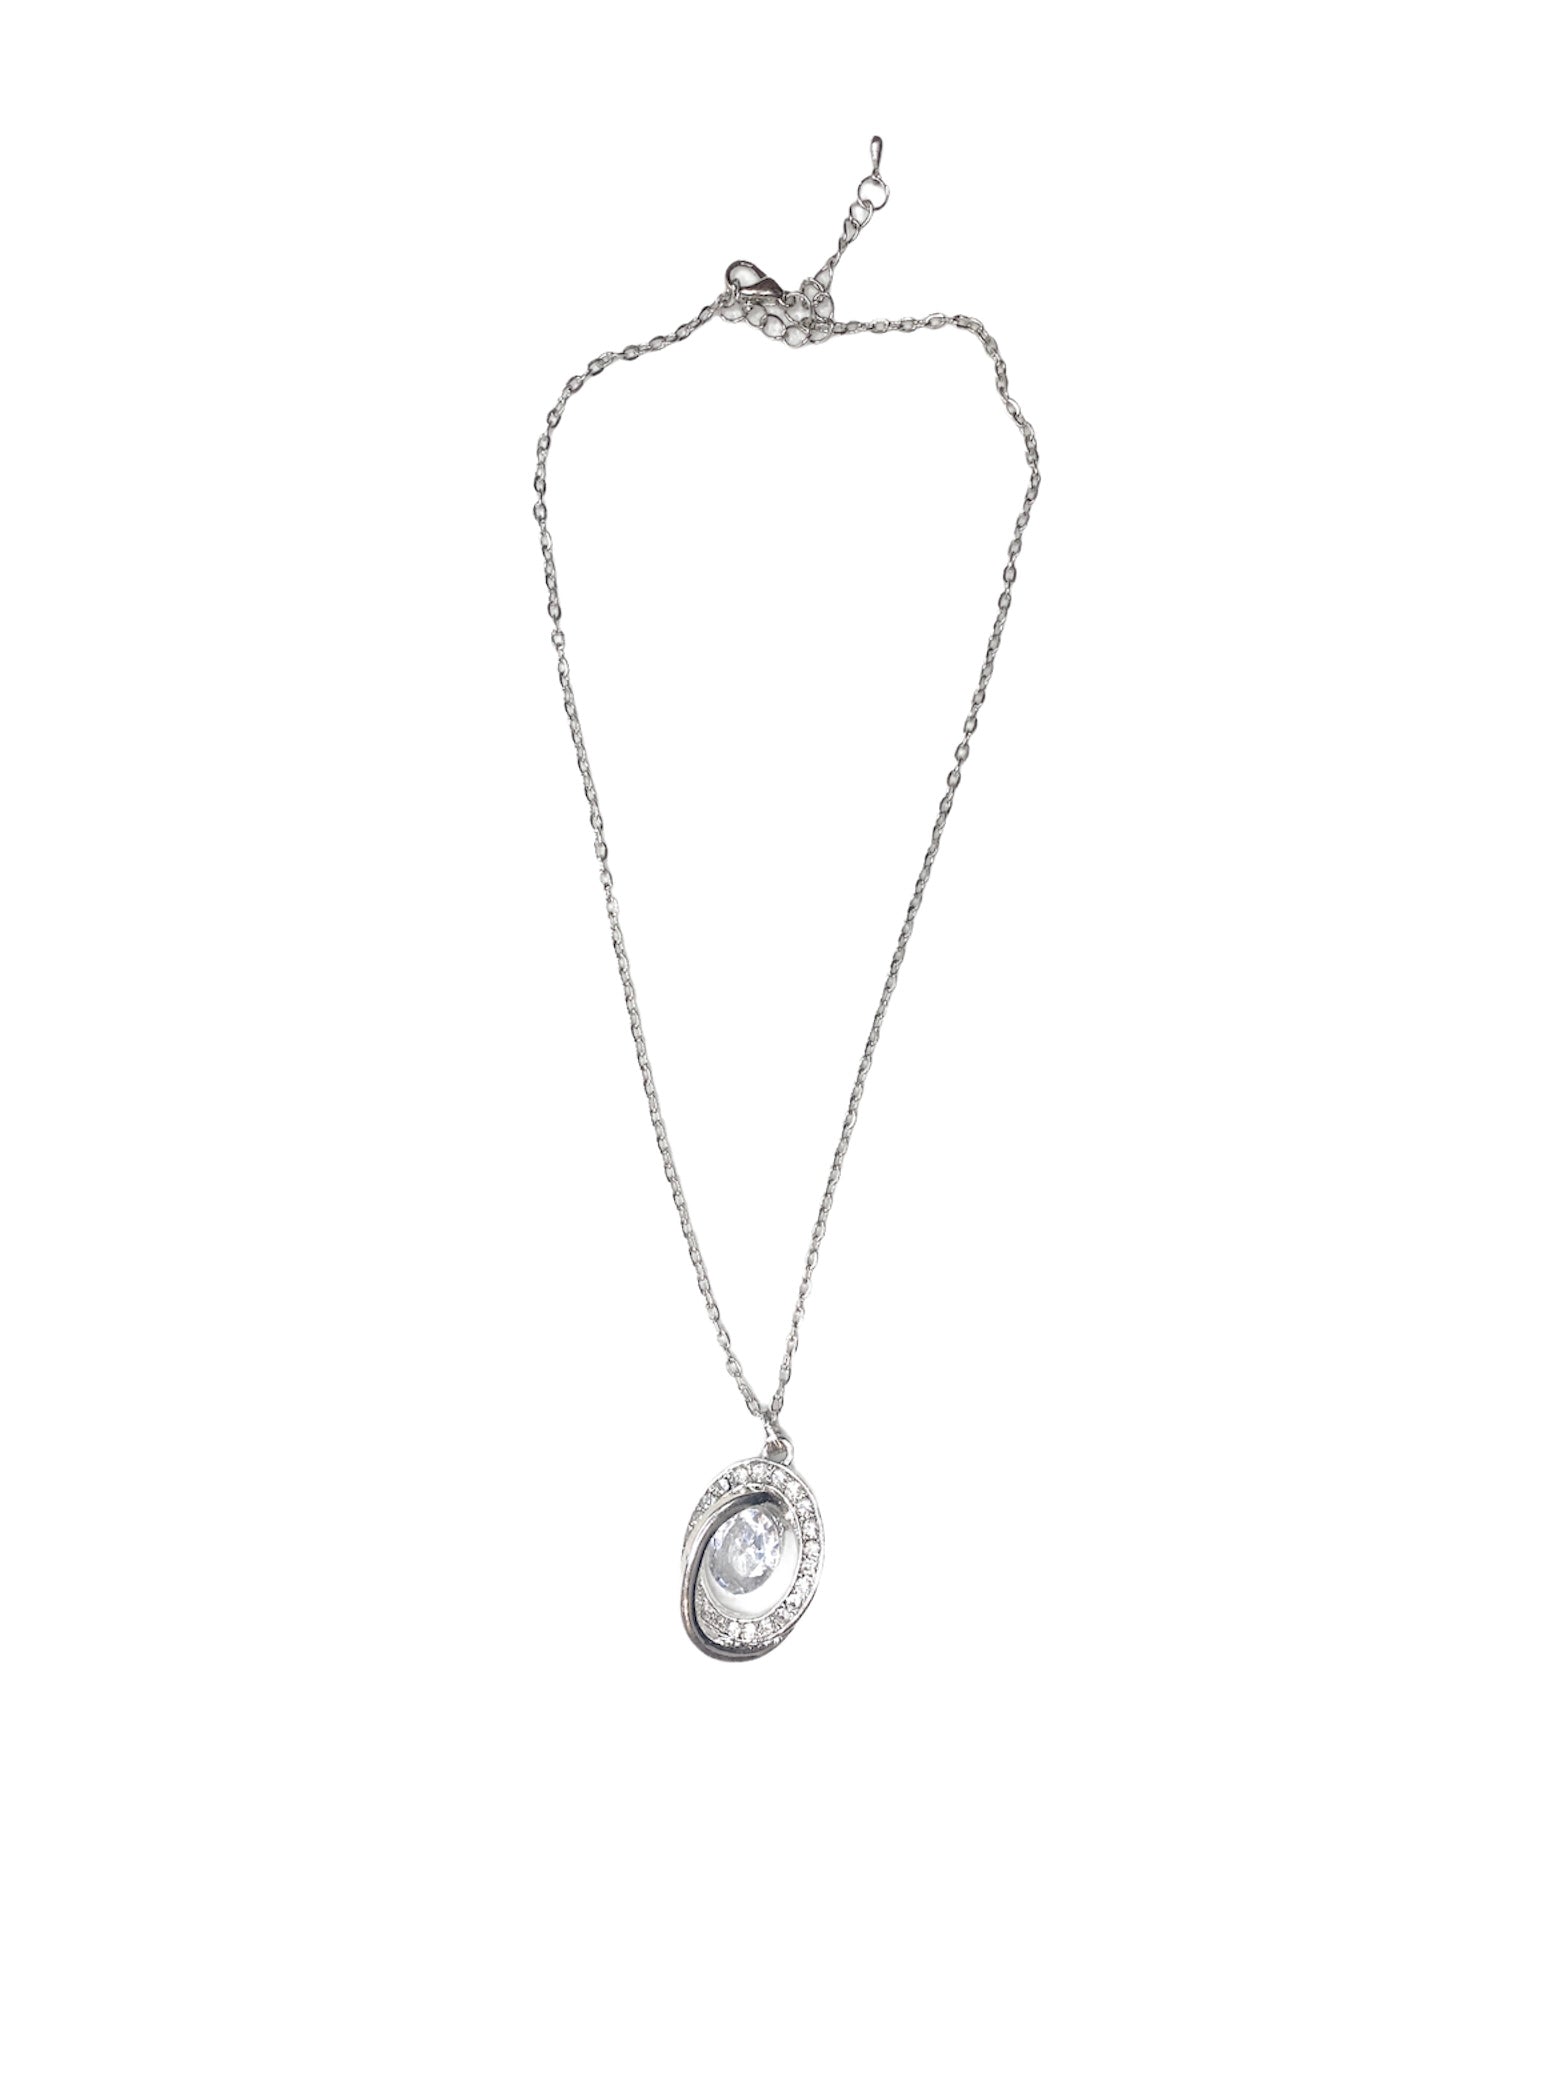 Oval pendant necklace (x4)